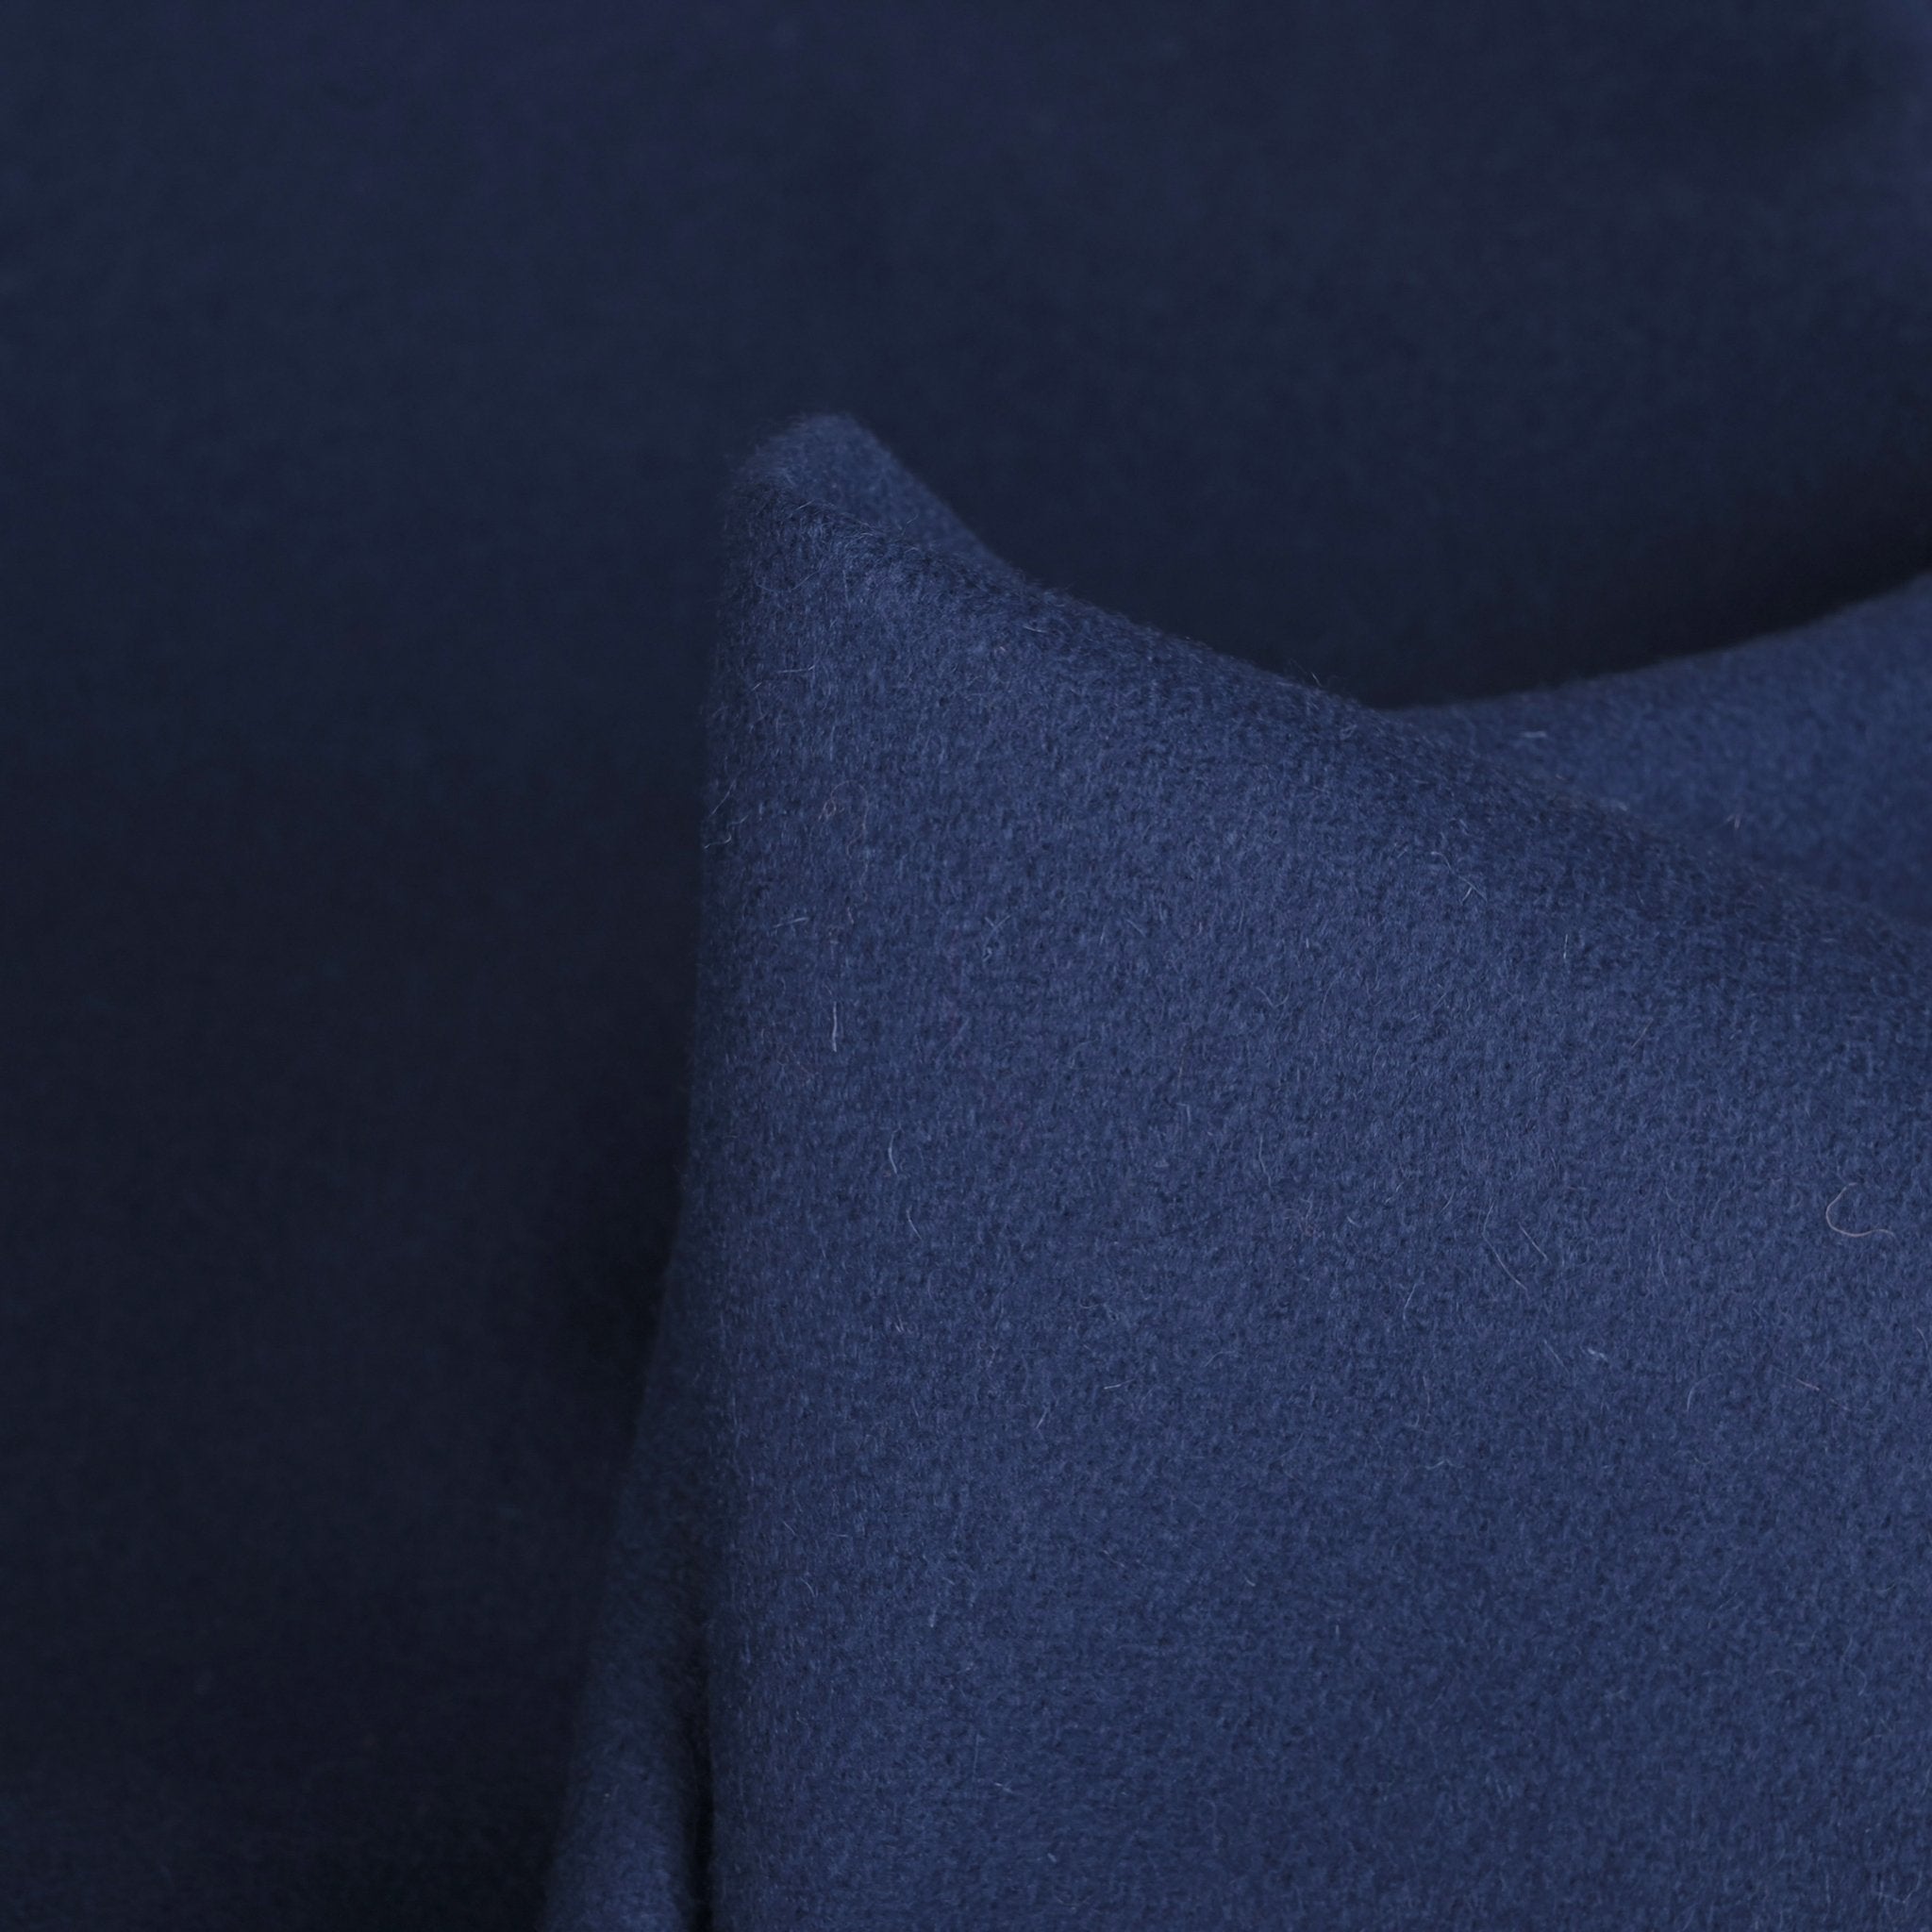 Dark Blue Melton Fabric 4548